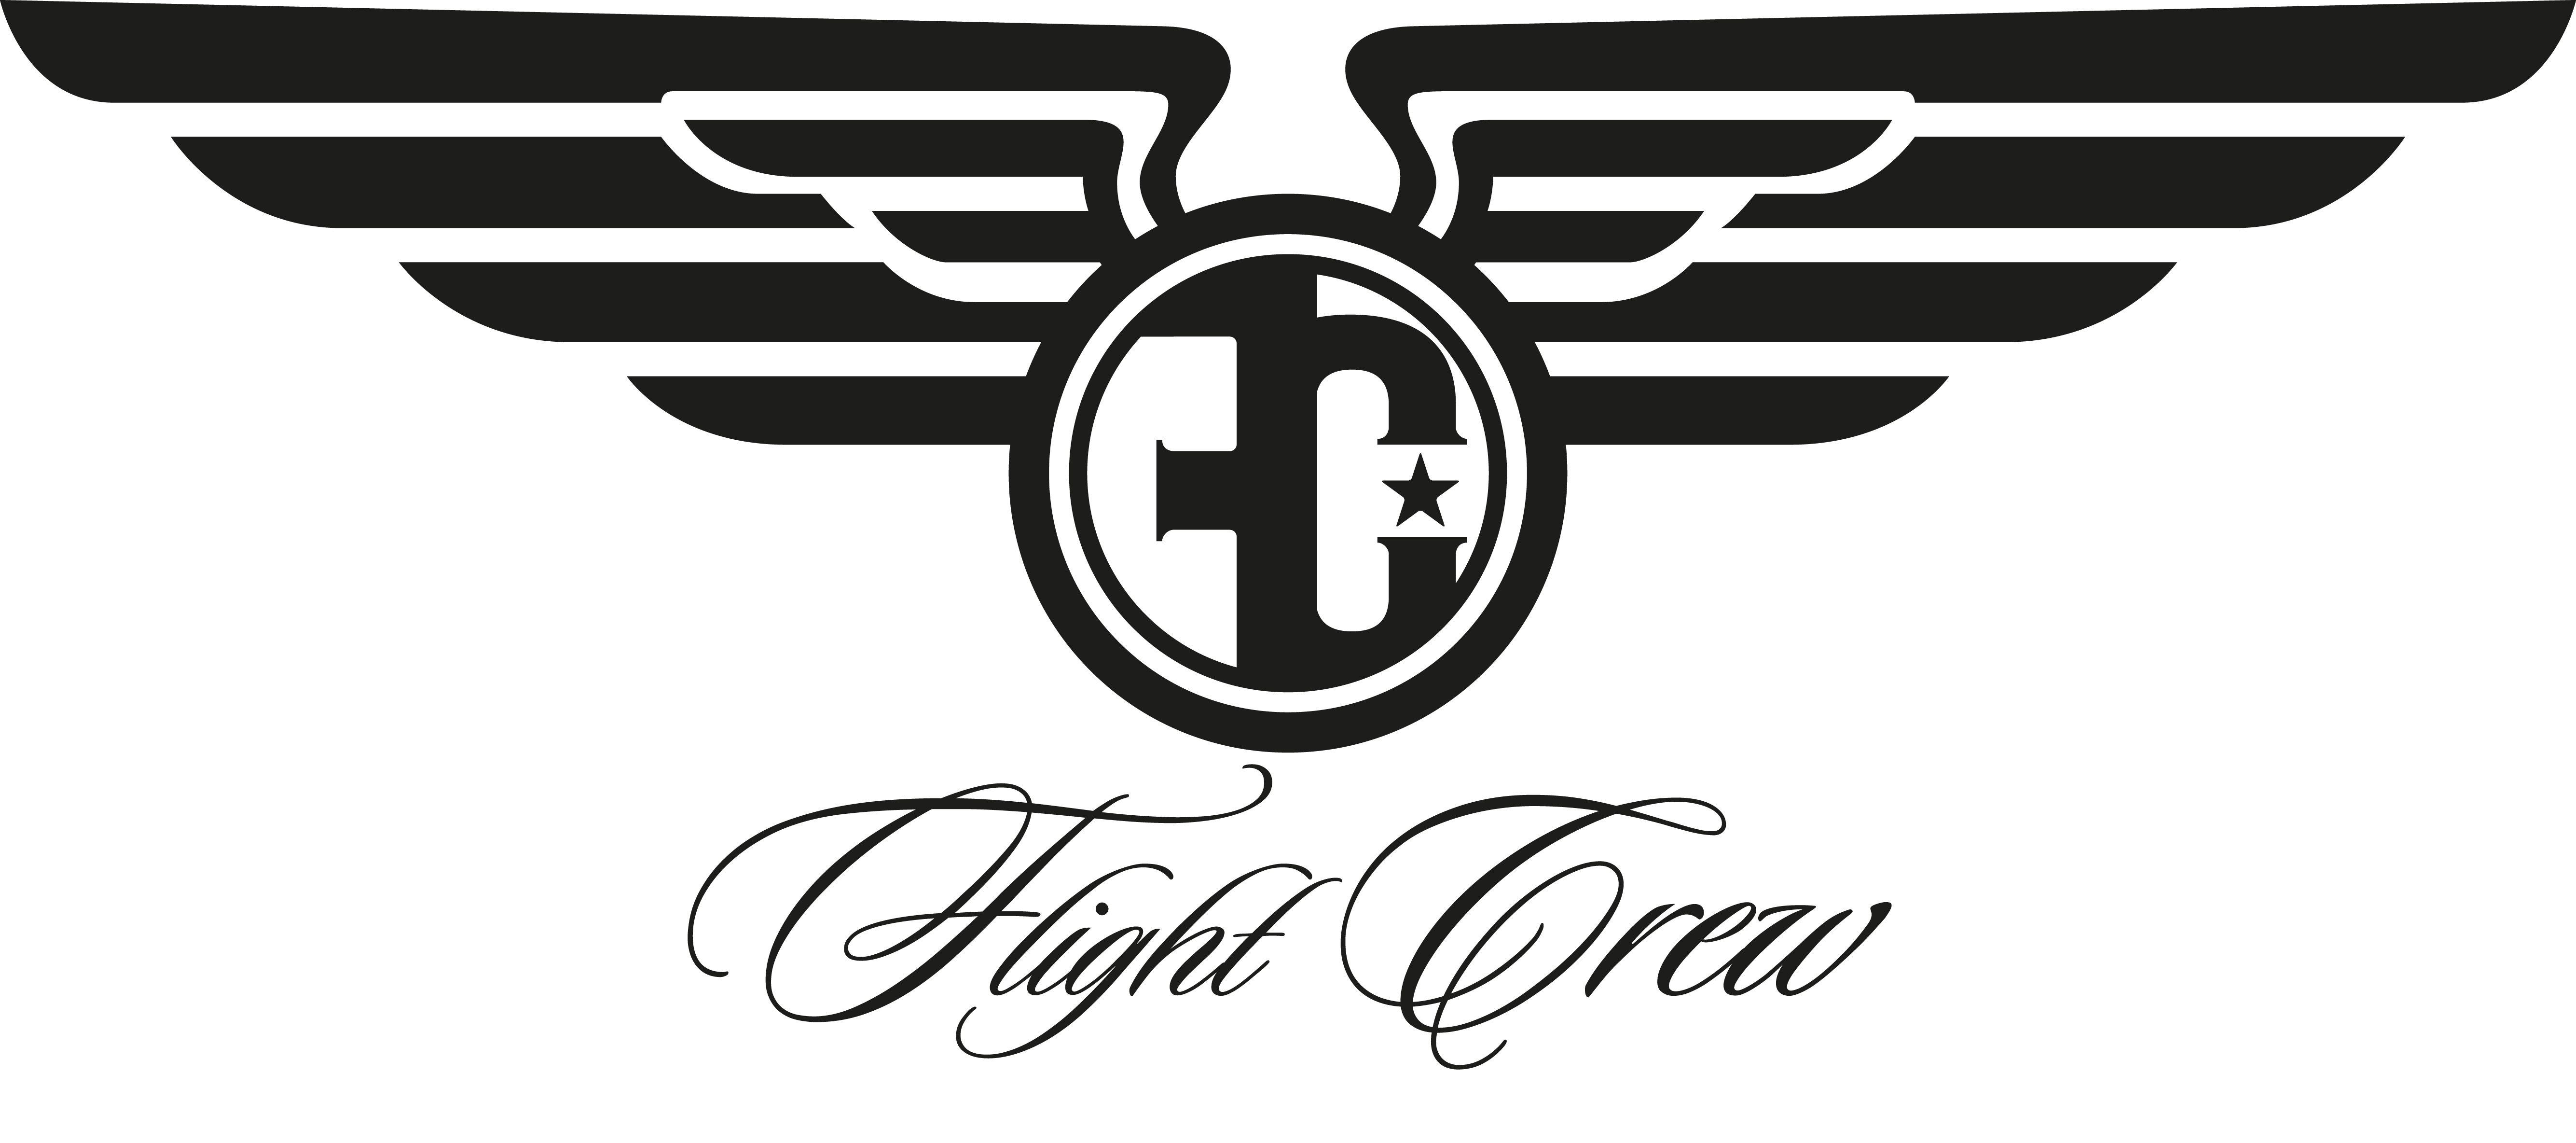 Flight Crew Logo - LogoDix